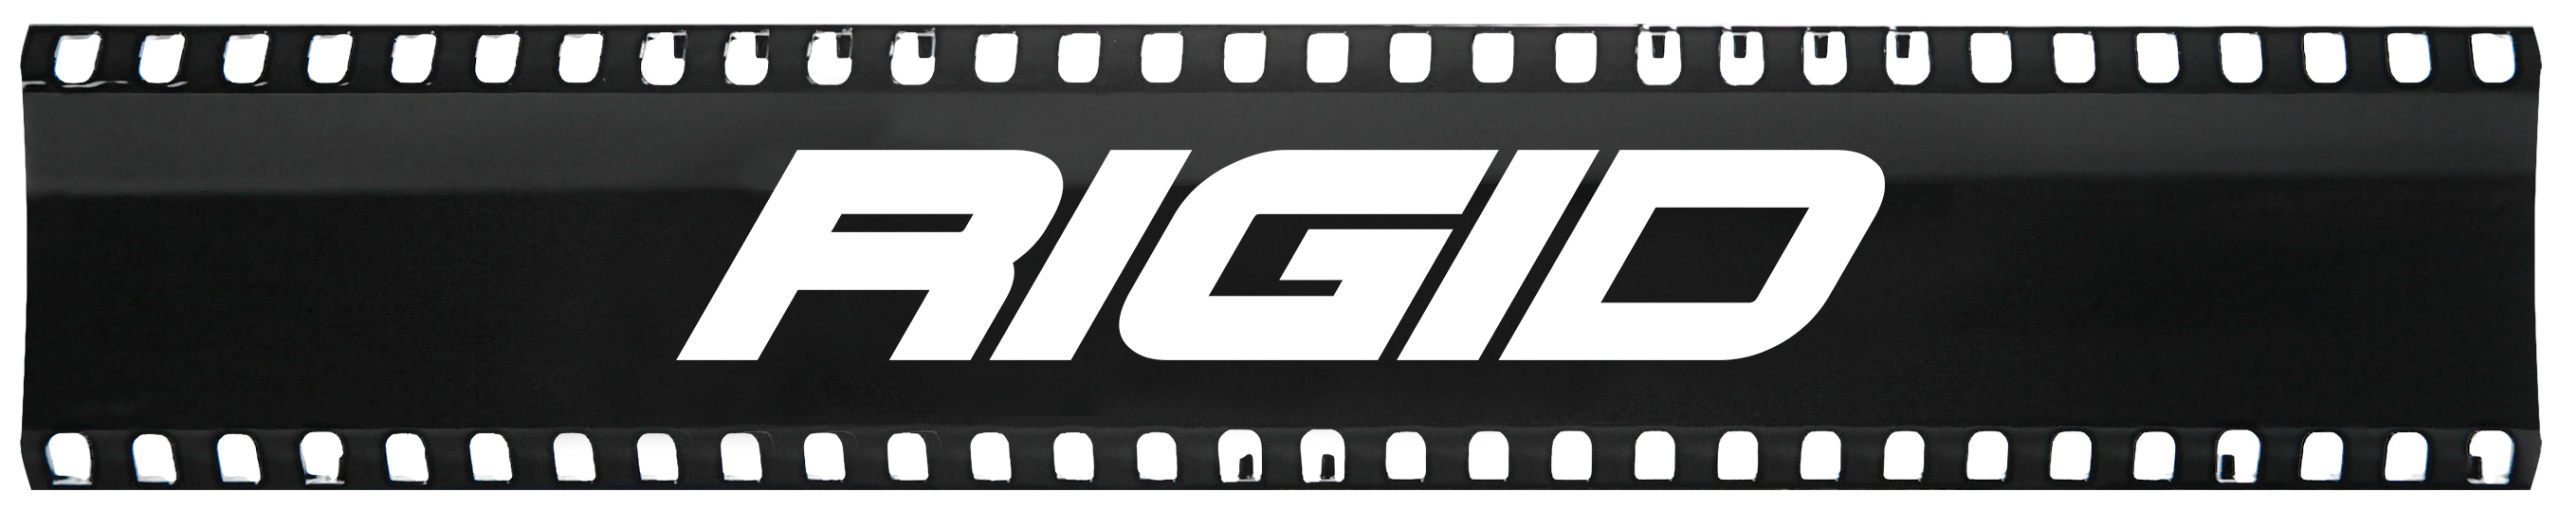 Rigid Industries 10 Inch Light Cover Black SR-Series Pro